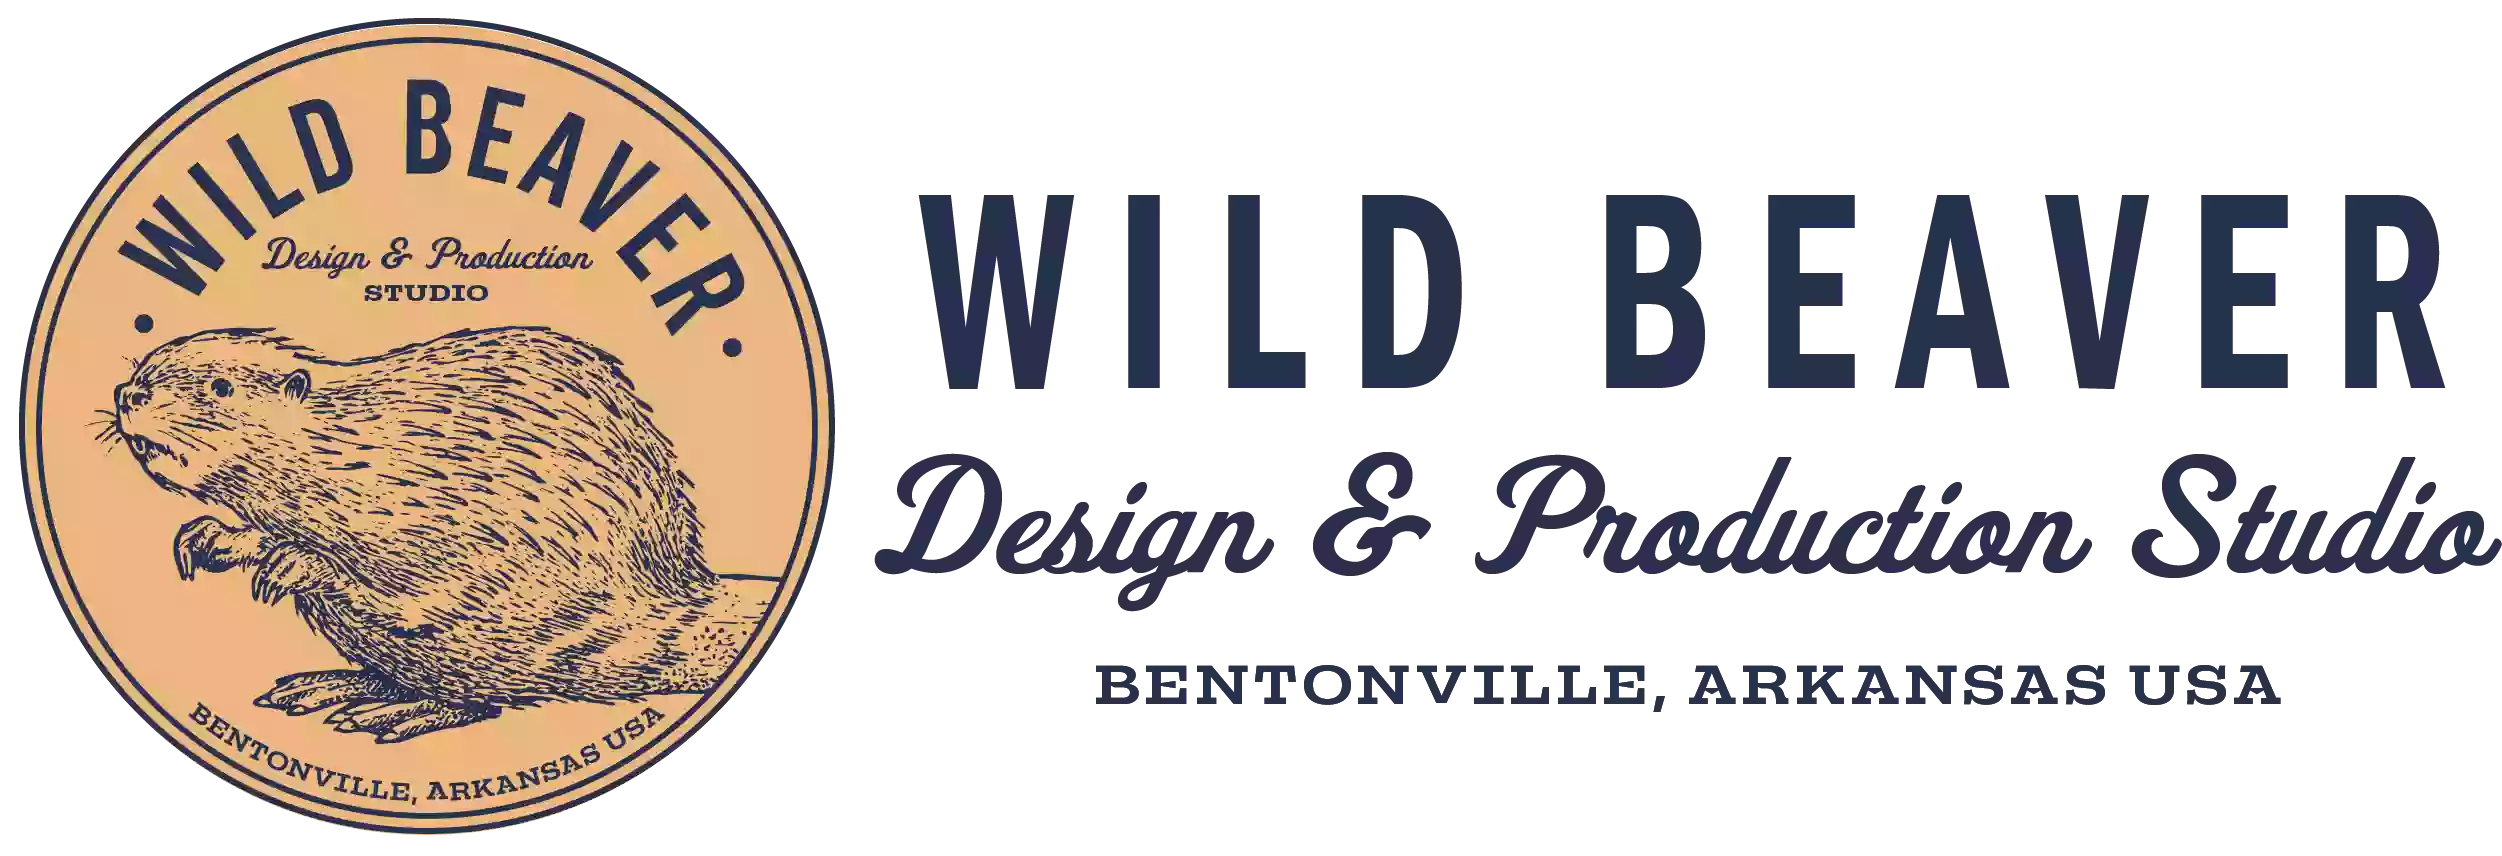 Wild Beaver Design & Production Studio